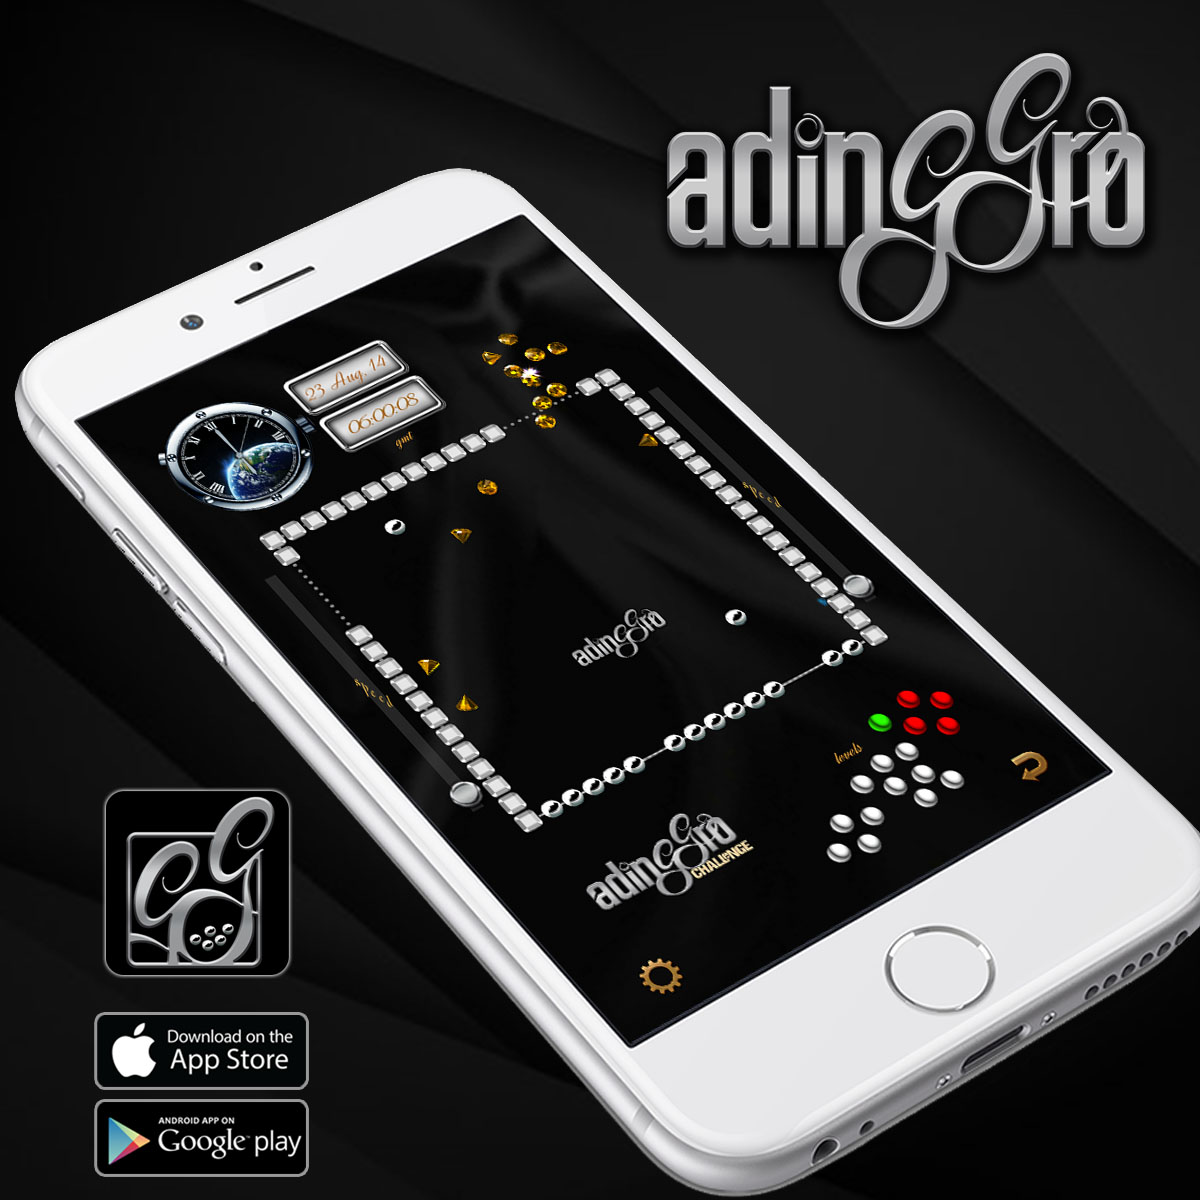 Adinggro Casual Mobile Game